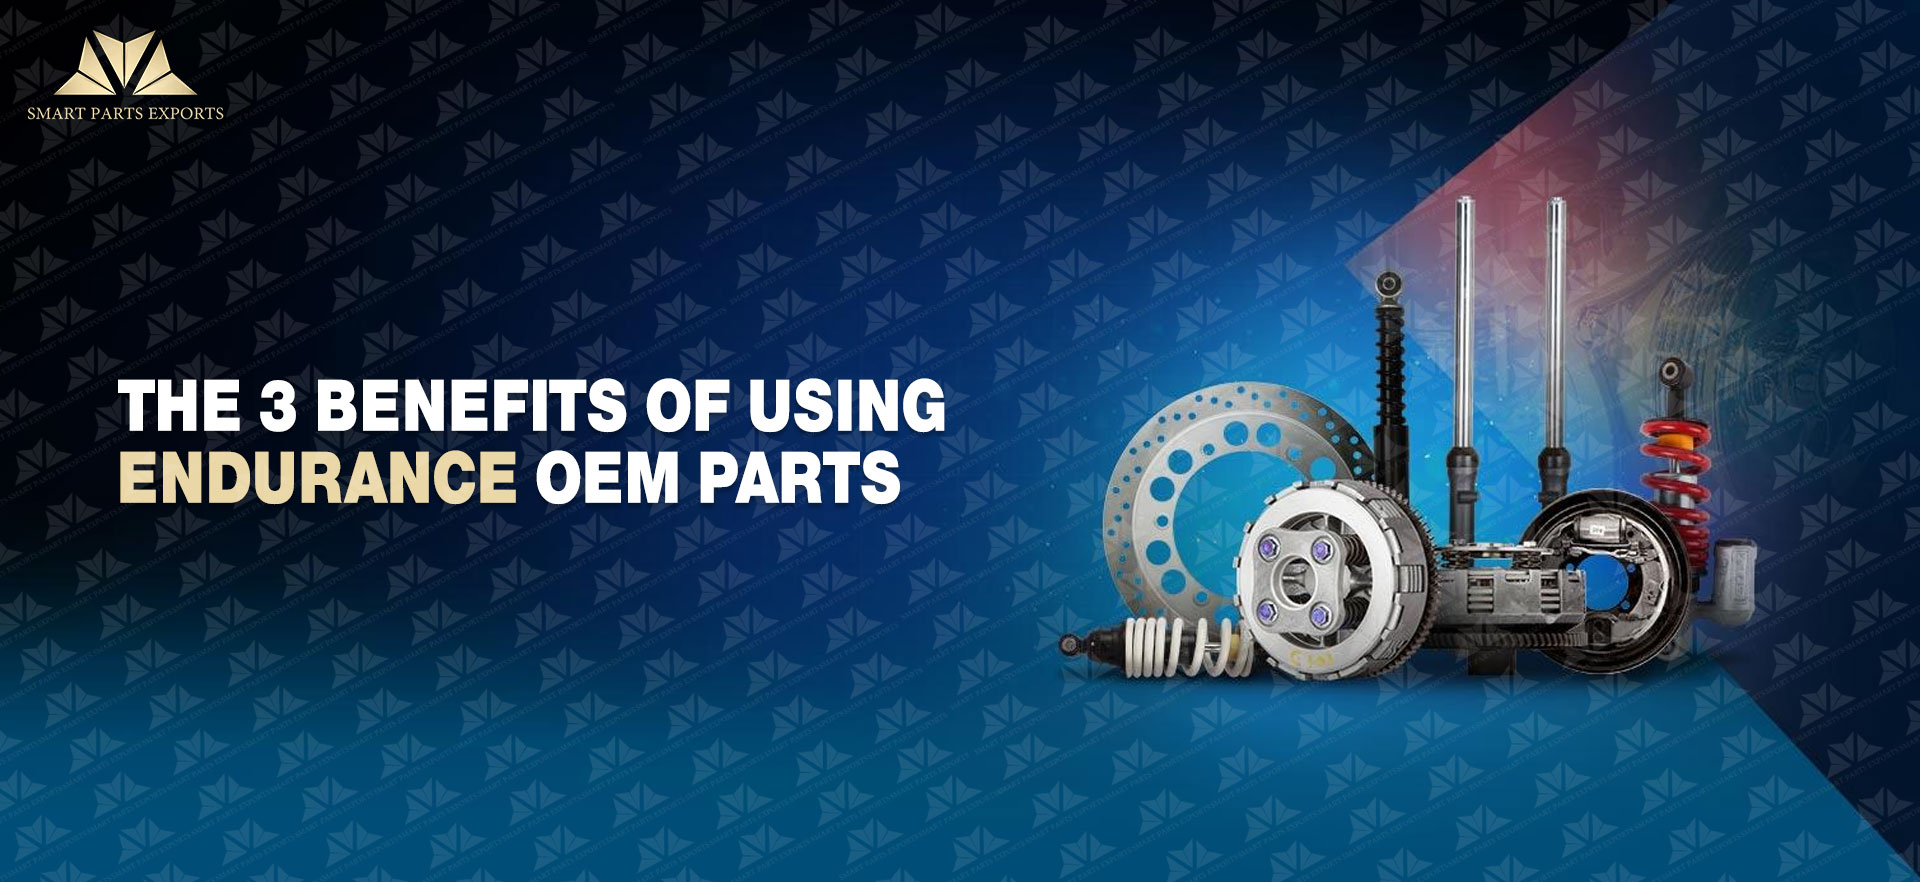 Exporter of Endurance Auto Spare Parts : Smart Parts Exports